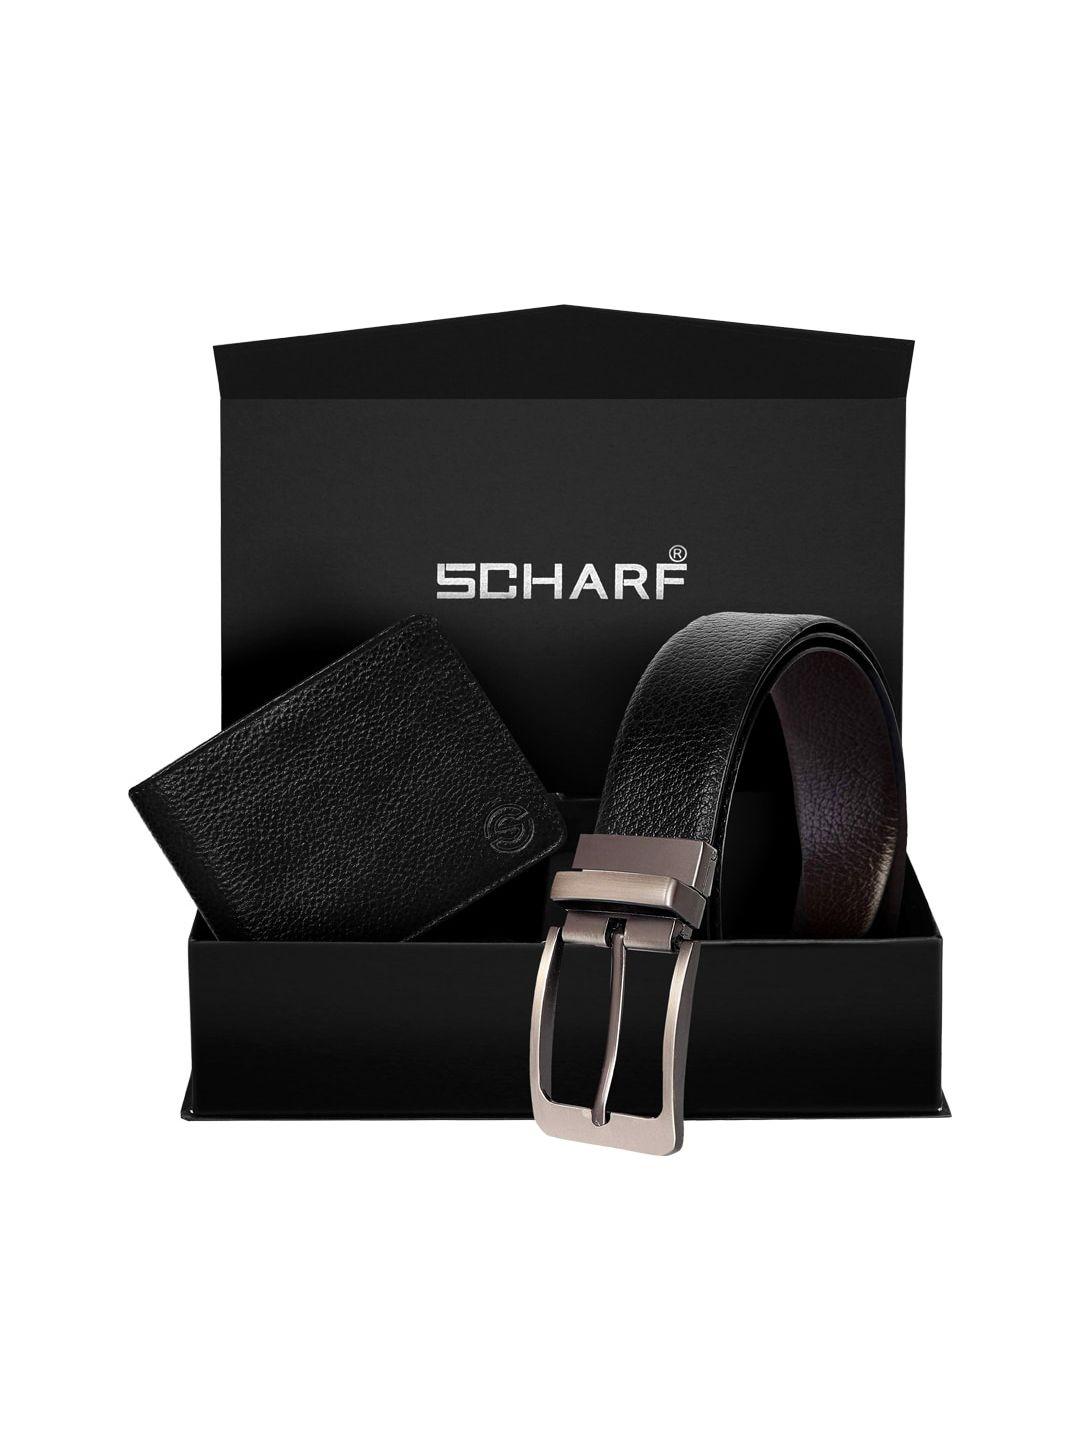 scharf men black accessory gift set